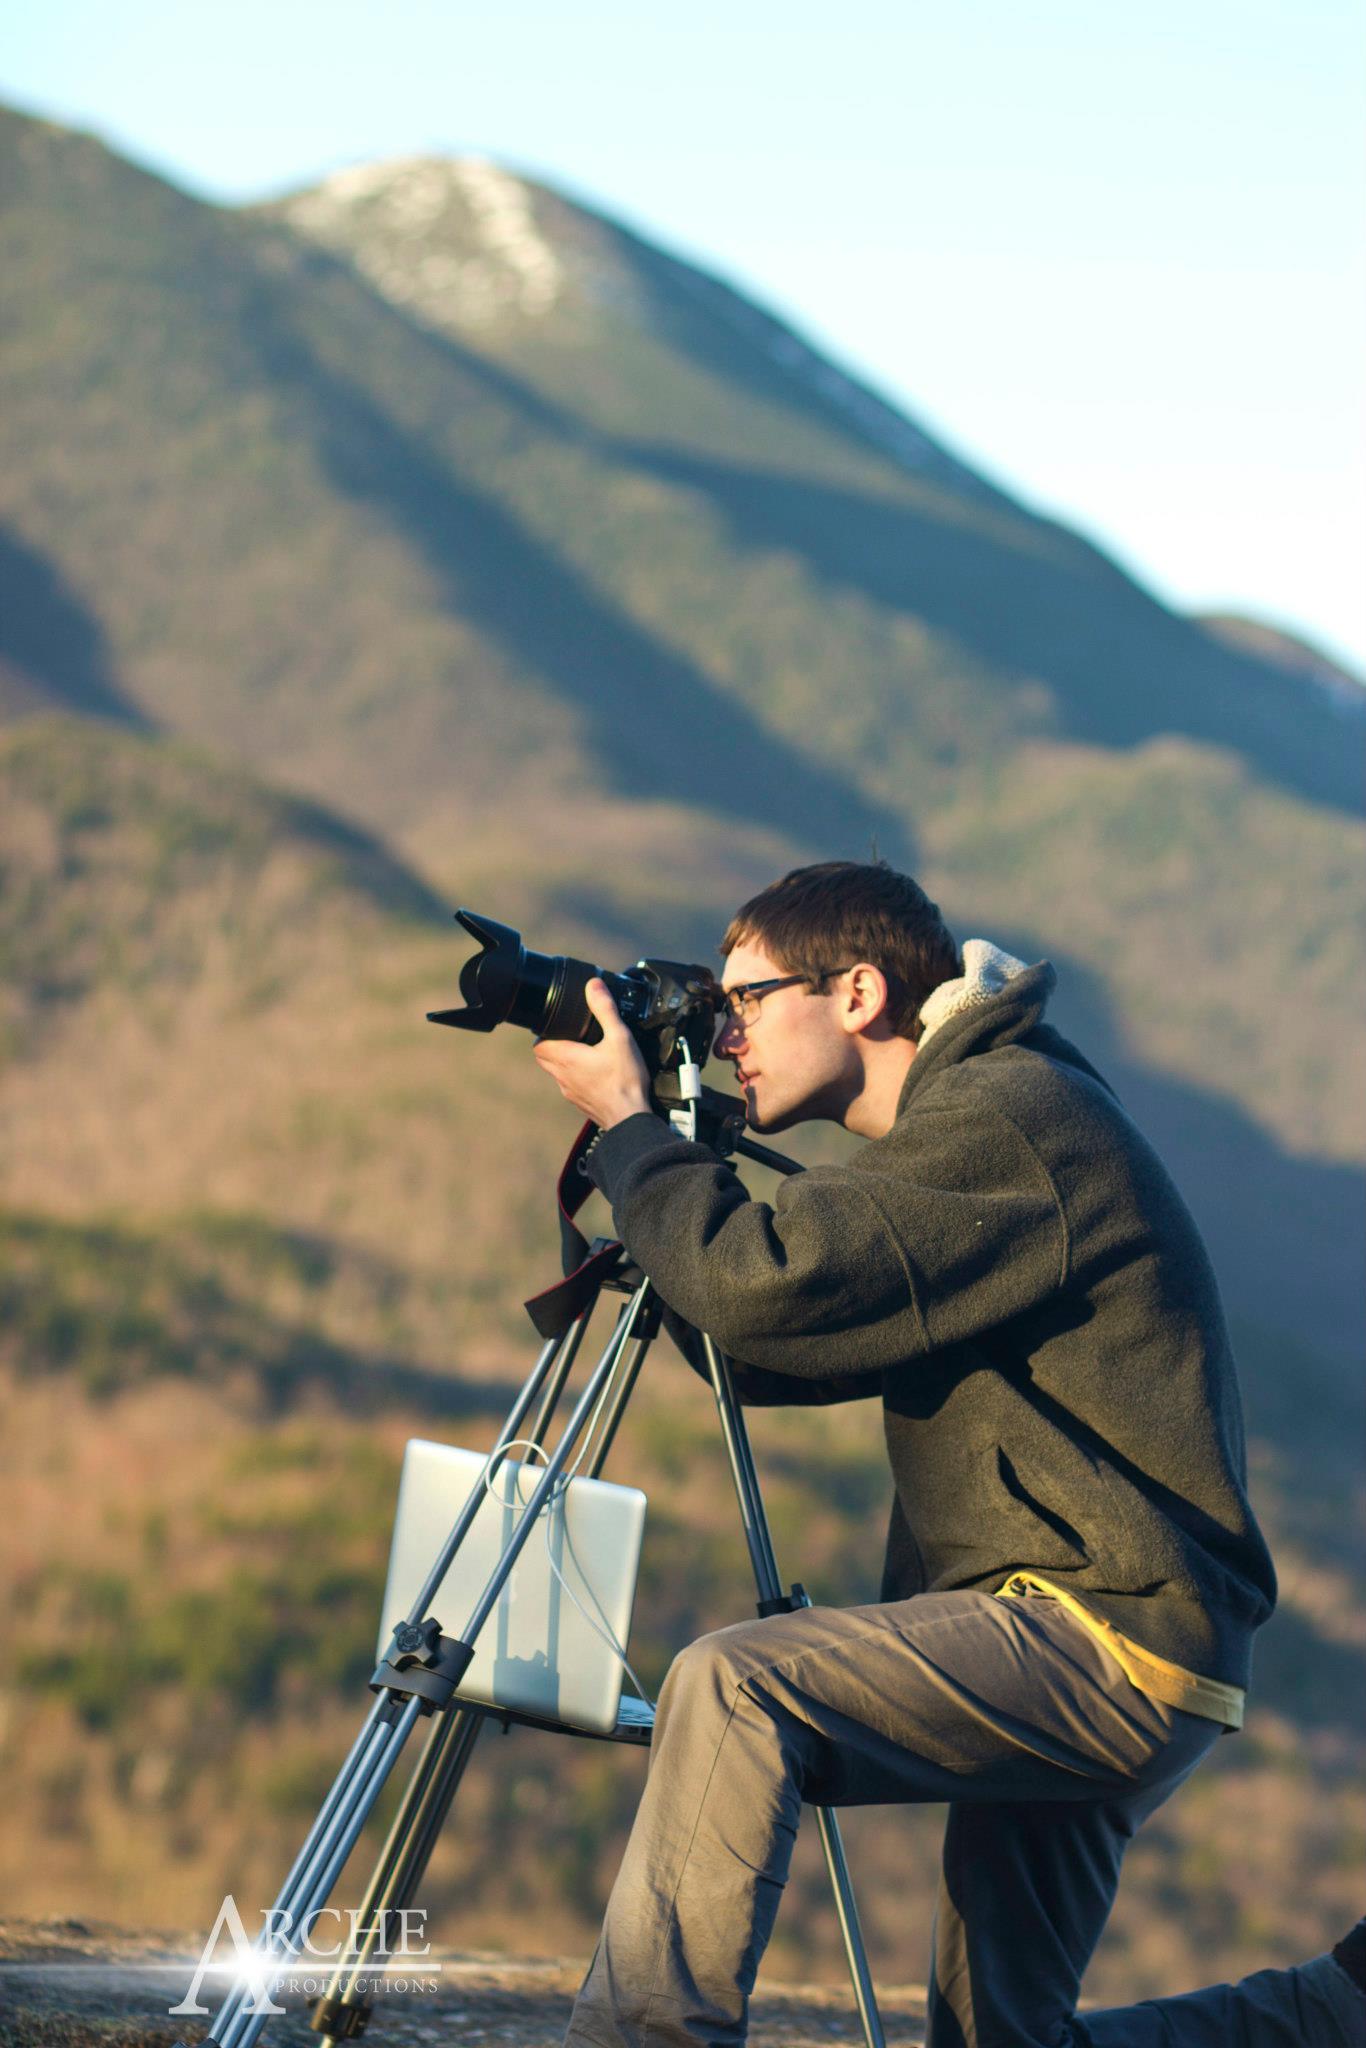 Matthew Elton shooting on a Canon 60D for 